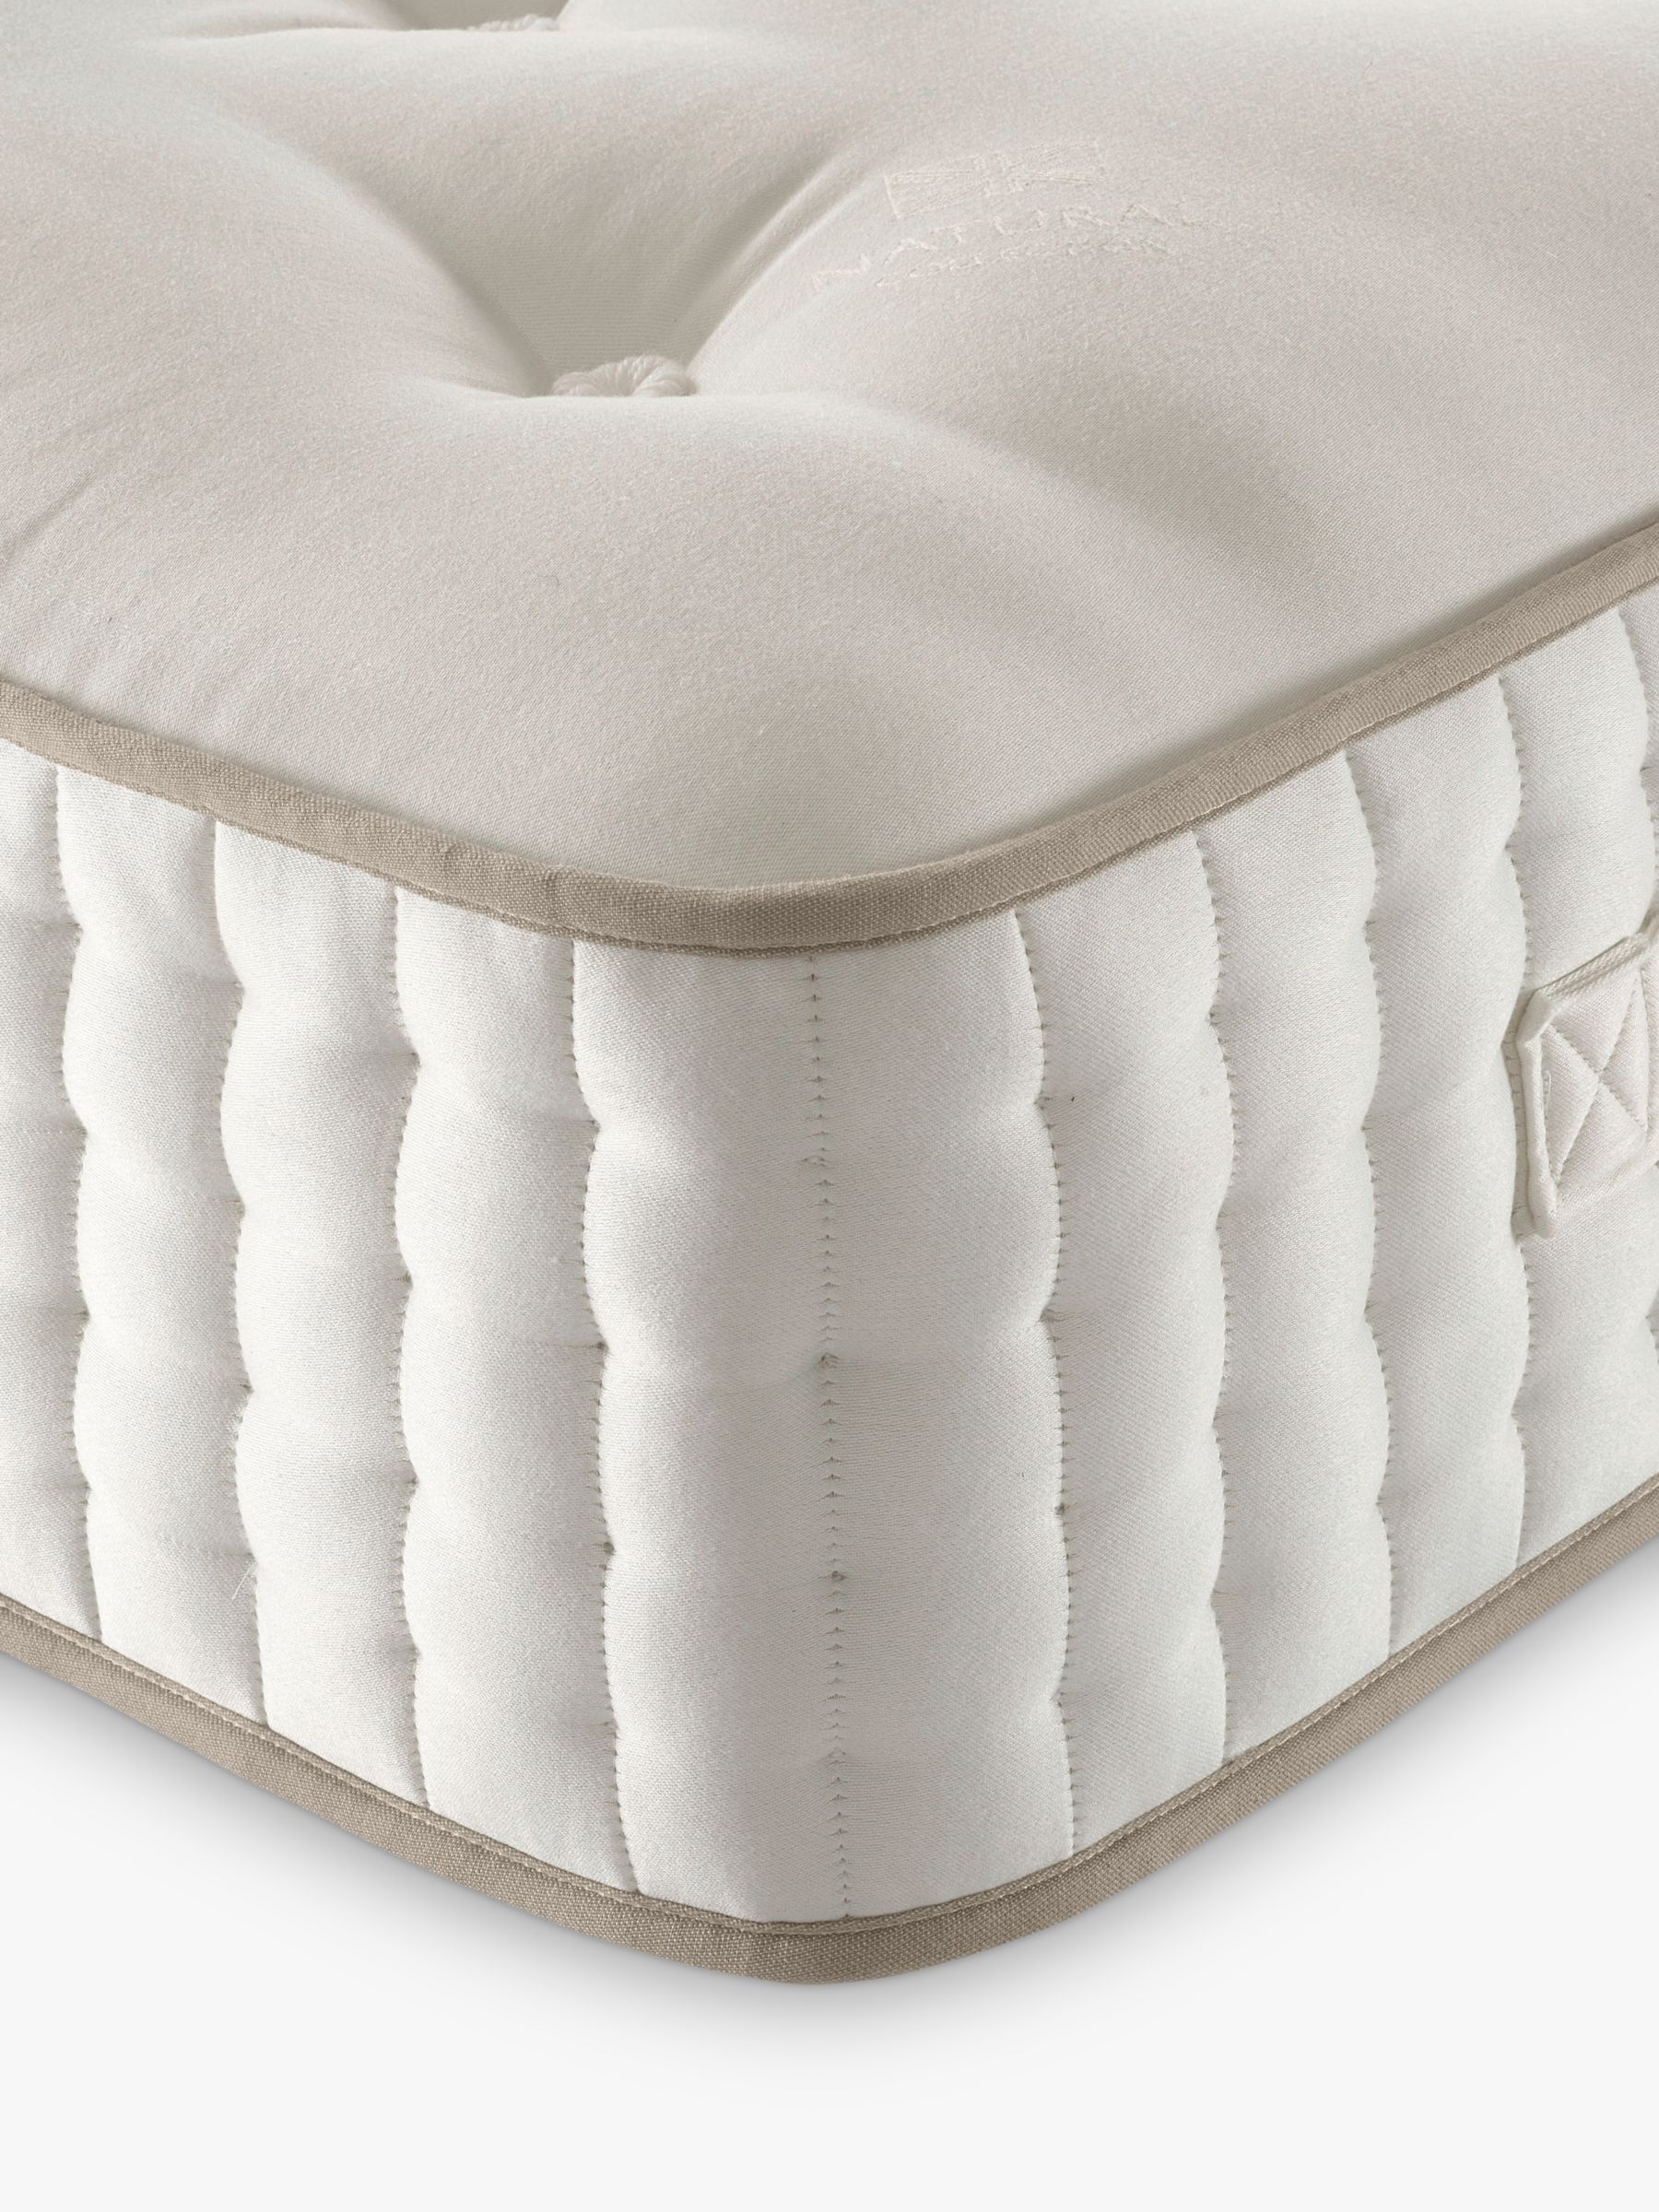 Photo of John lewis luxury natural collection cashmere 27000 super king size regular tension pocket spring zip link mattress